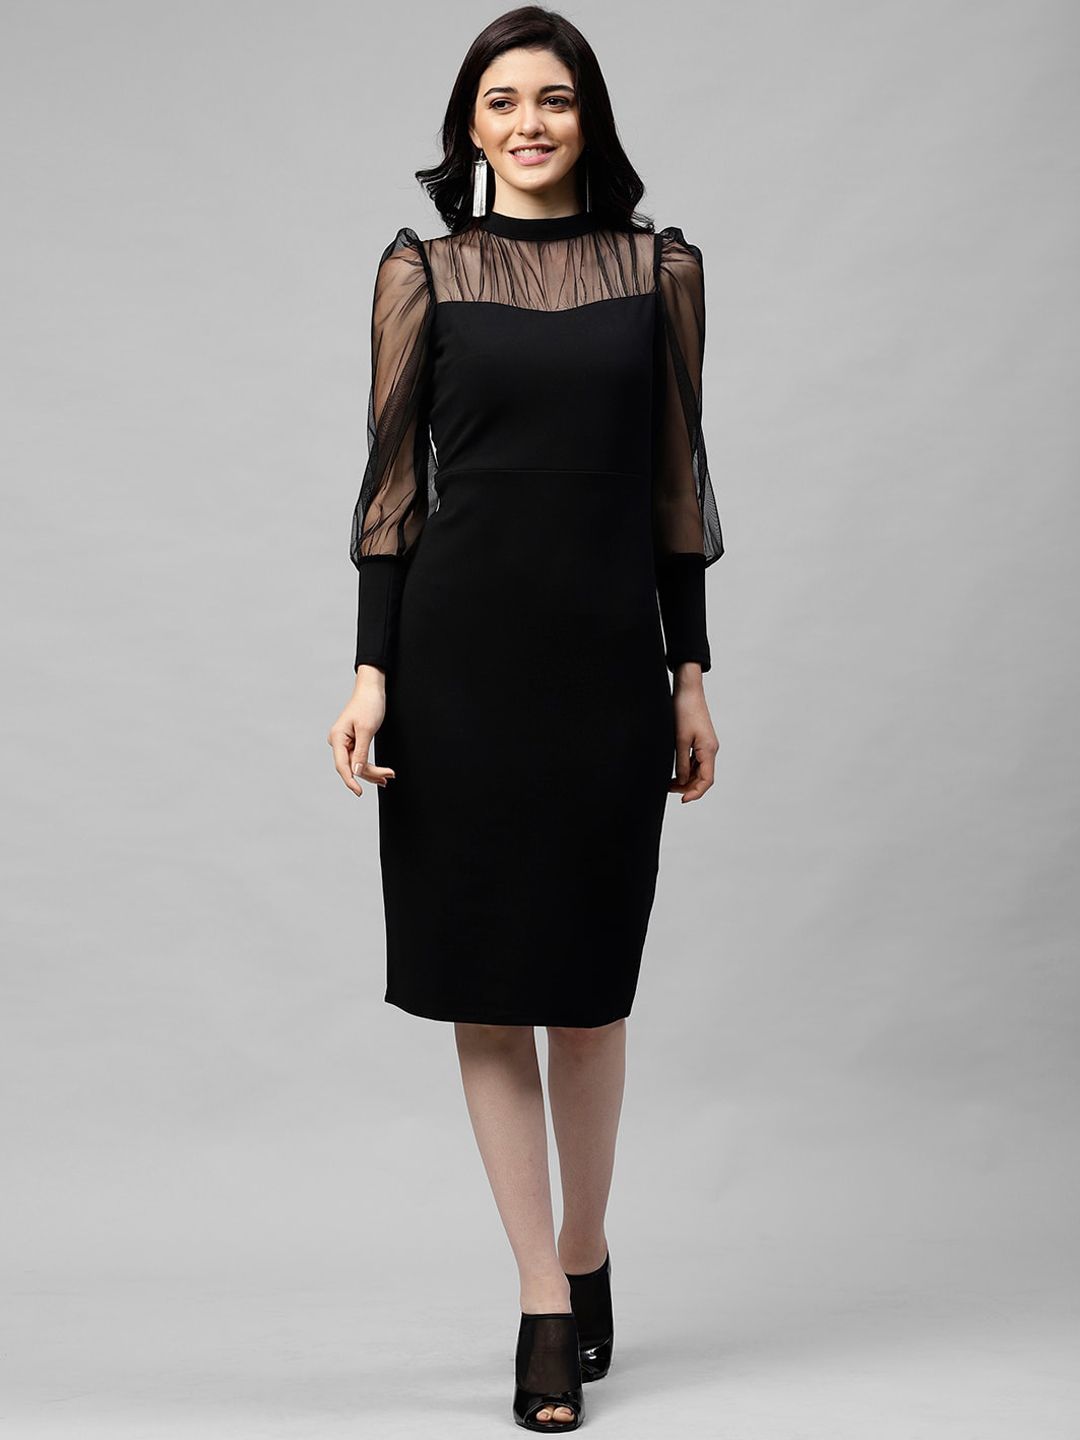 Athena Black Sheath Dress Price in India